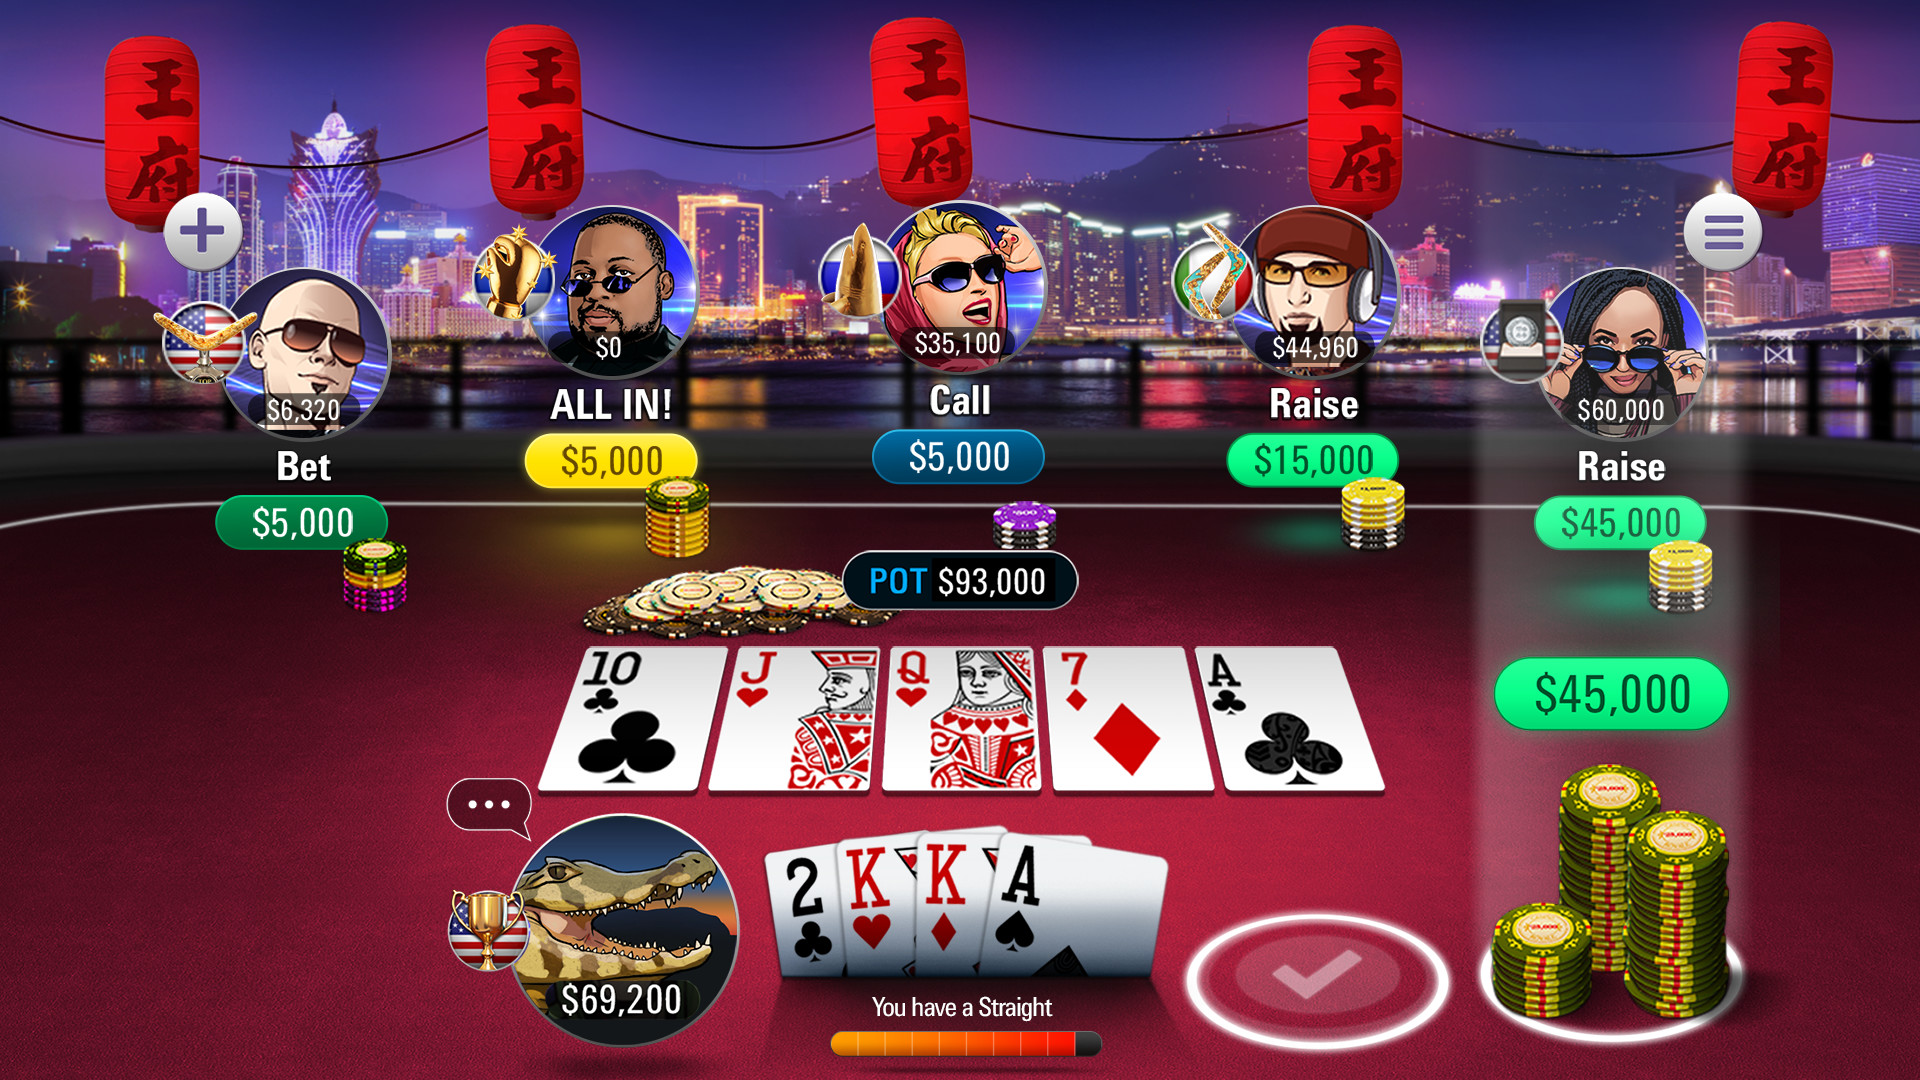 jackpot poker by pokerstars